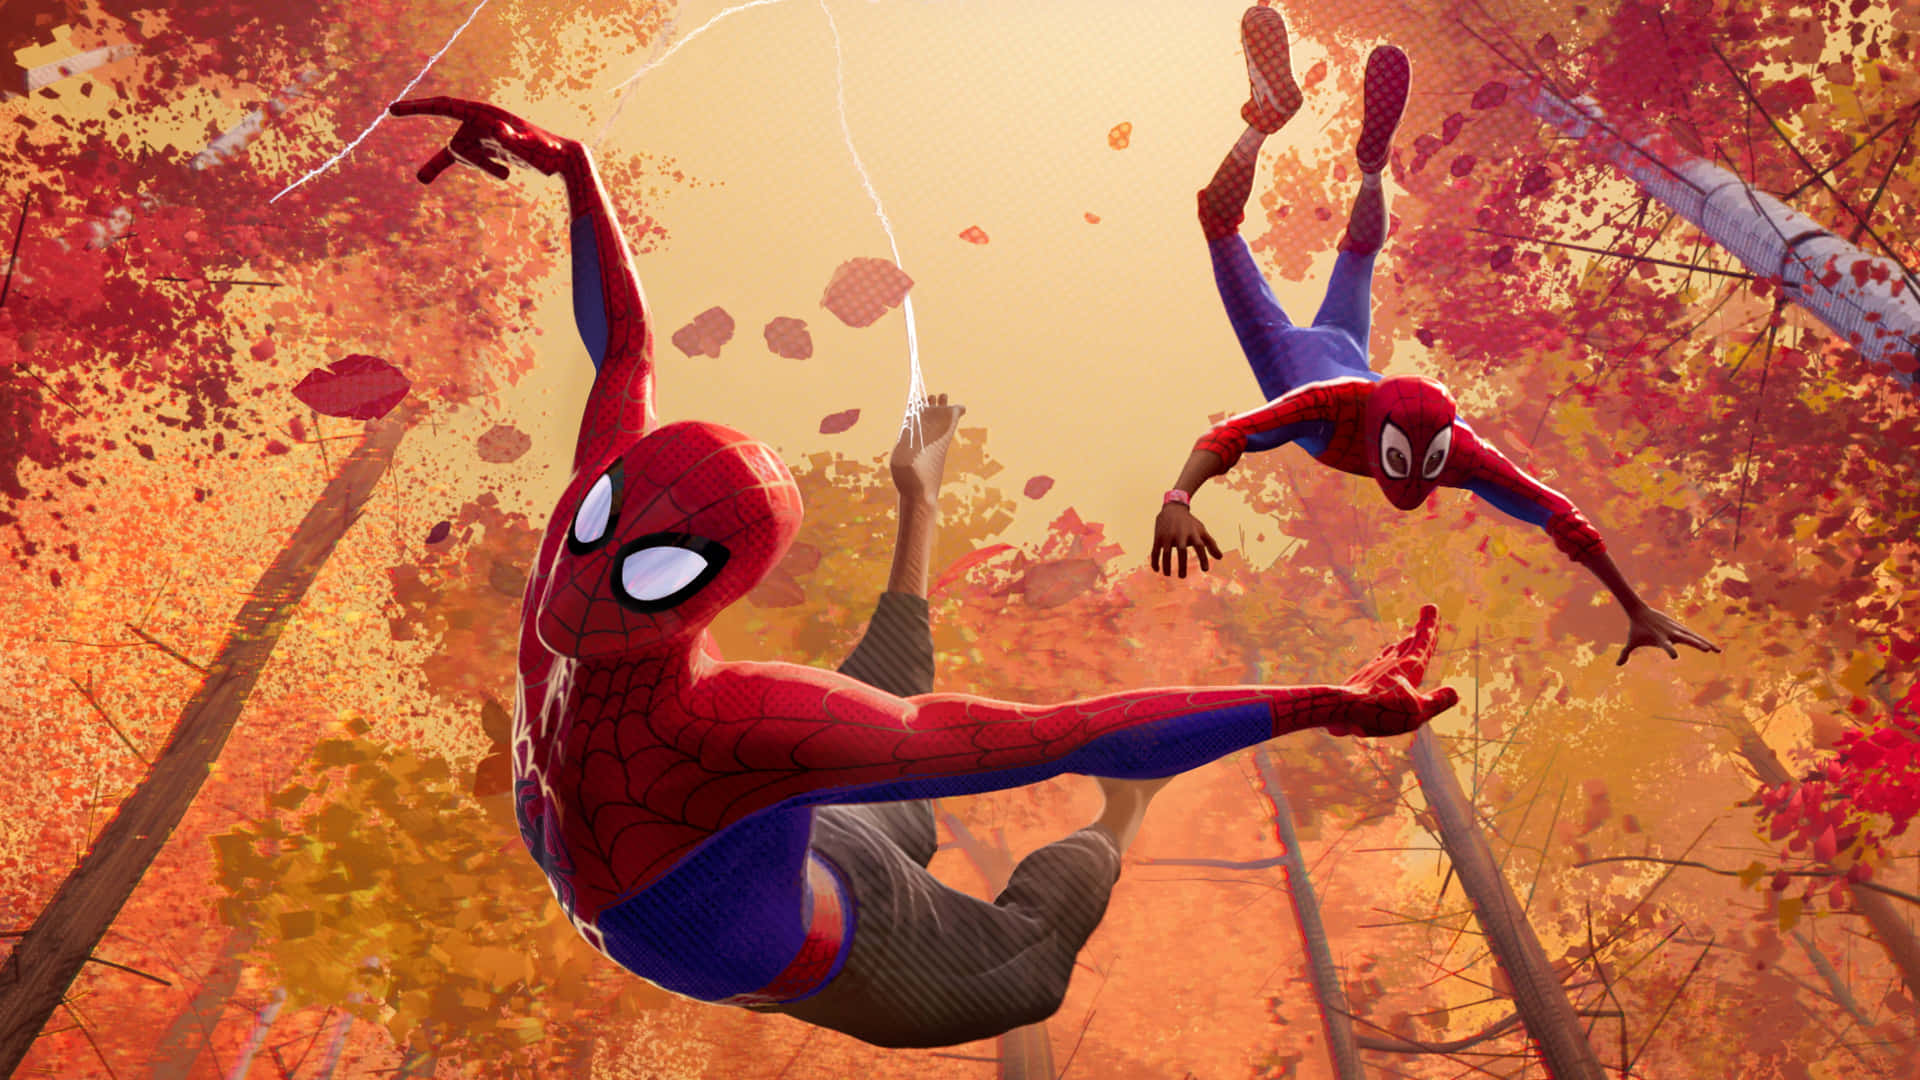 Spider-Man Swinging Through the City Wallpaper